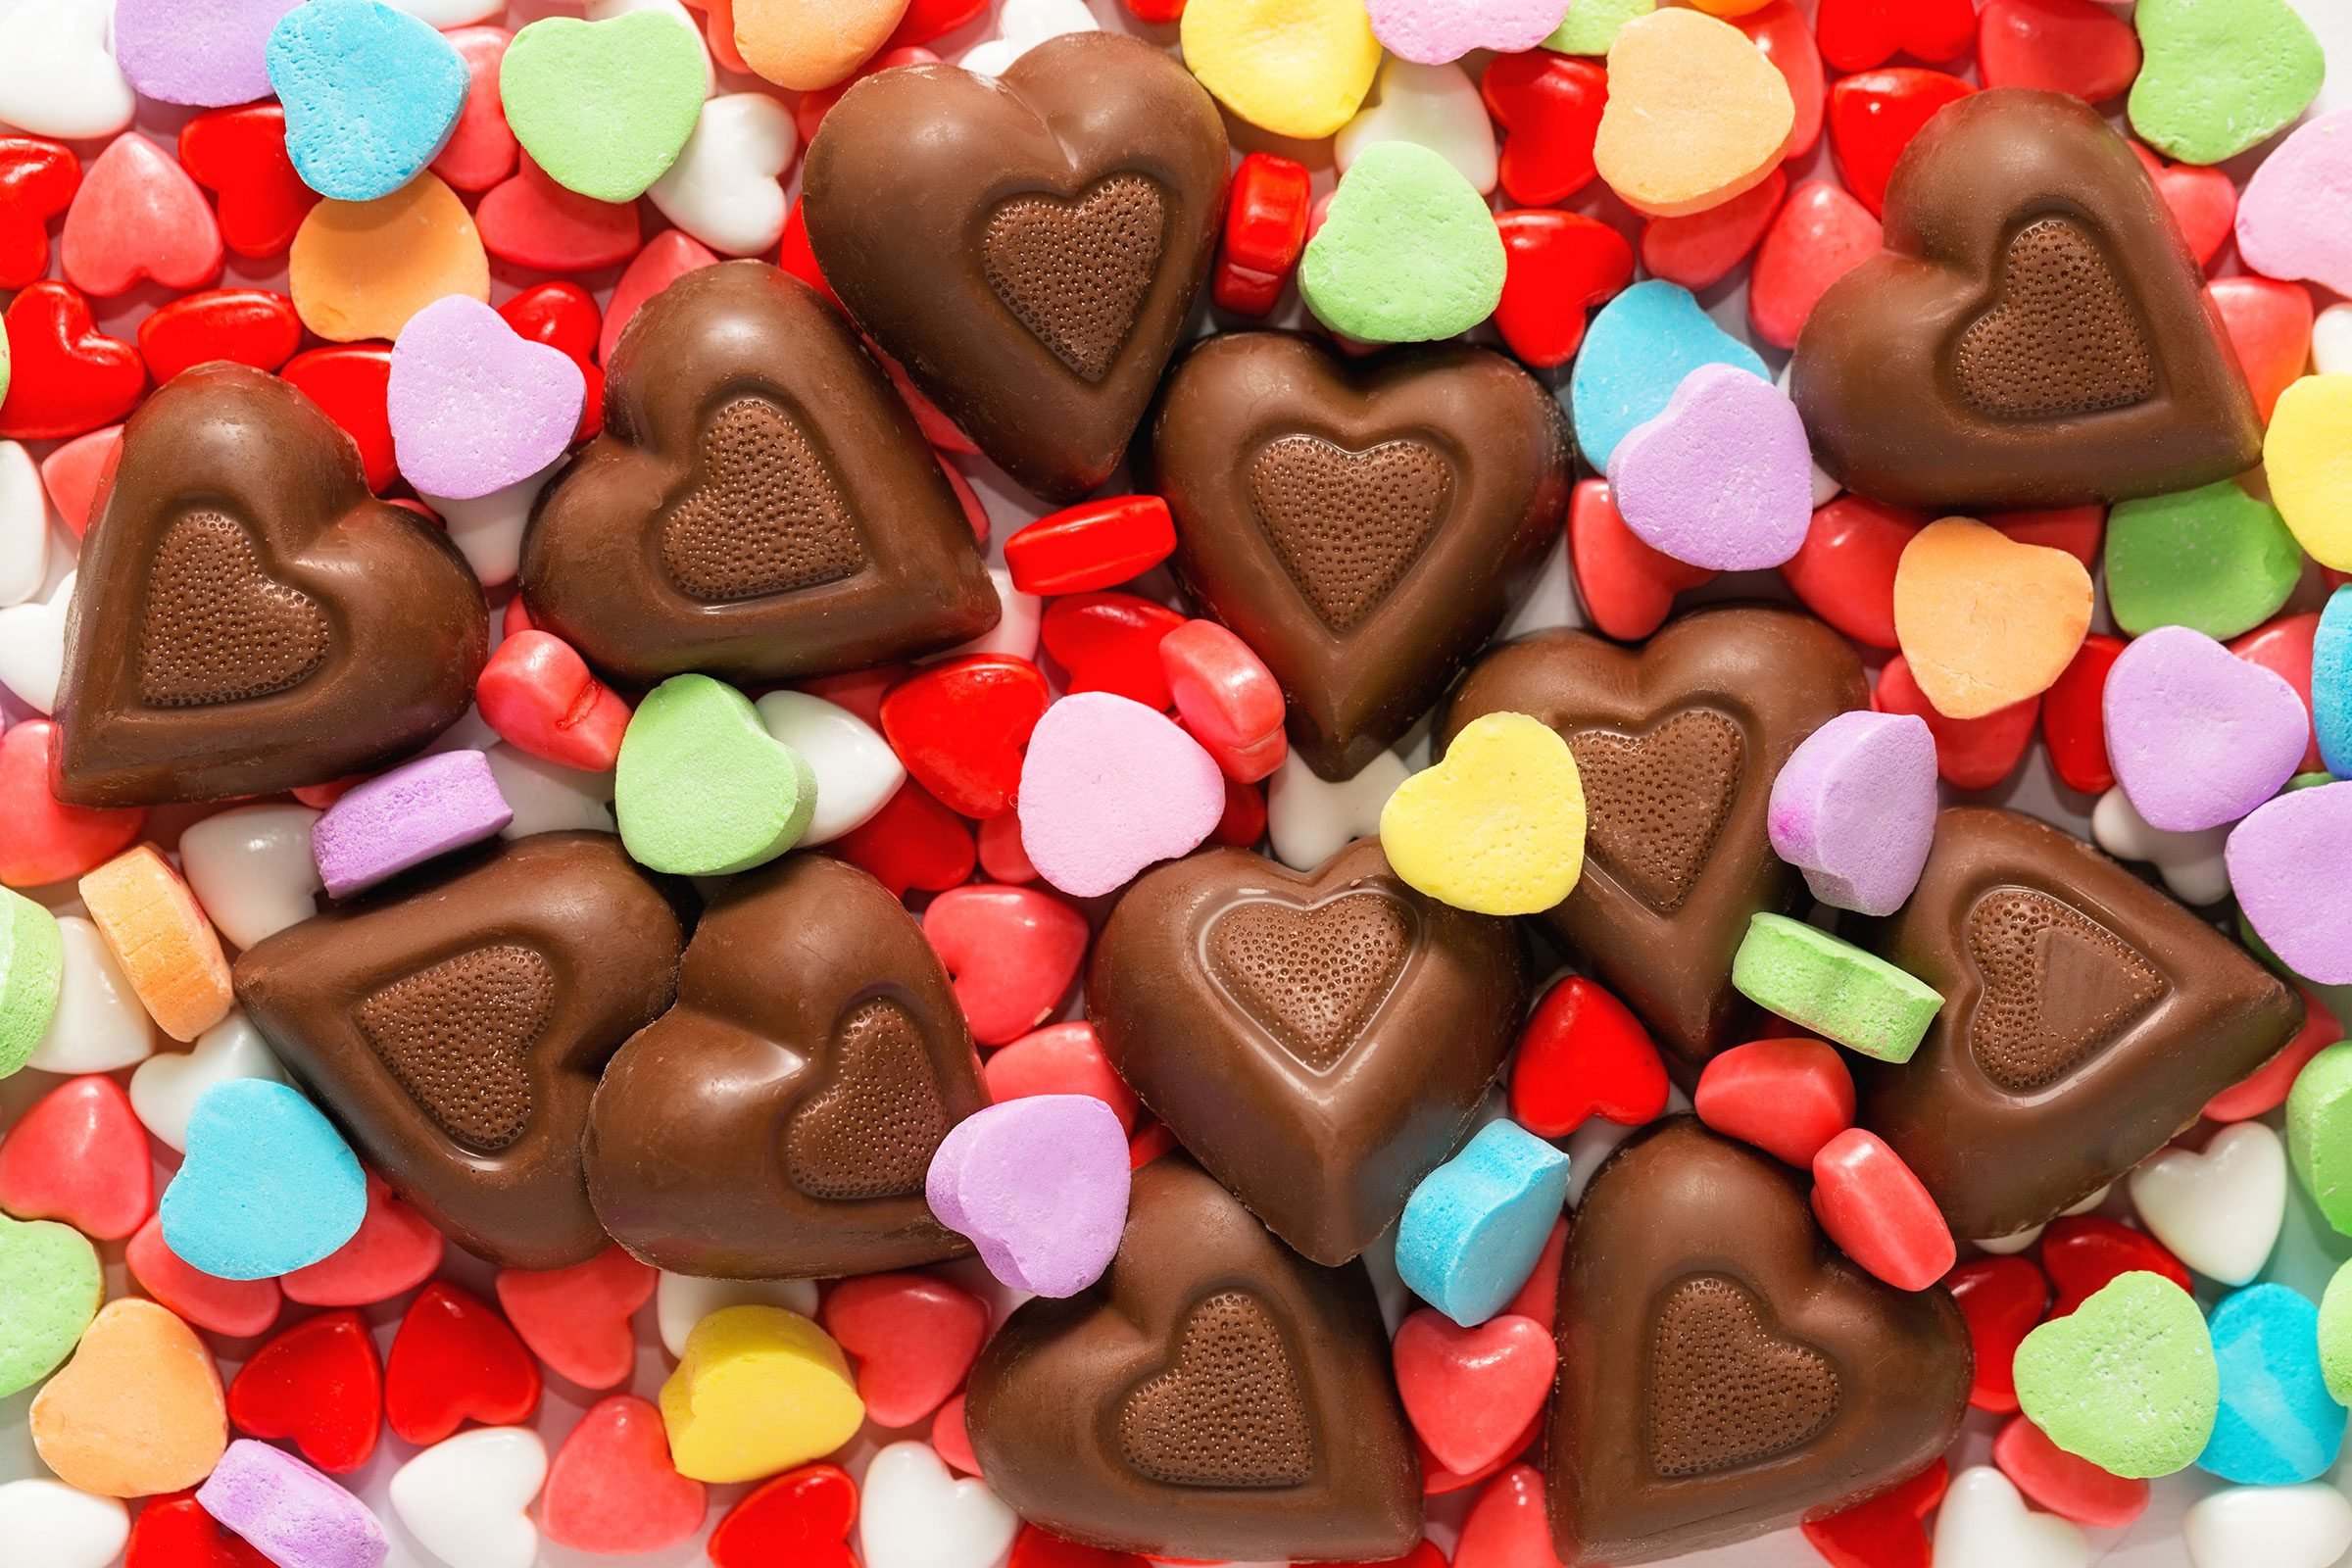 M&M'S Peanut Milk Chocolate Valentine's Day Candy Assortment Bag